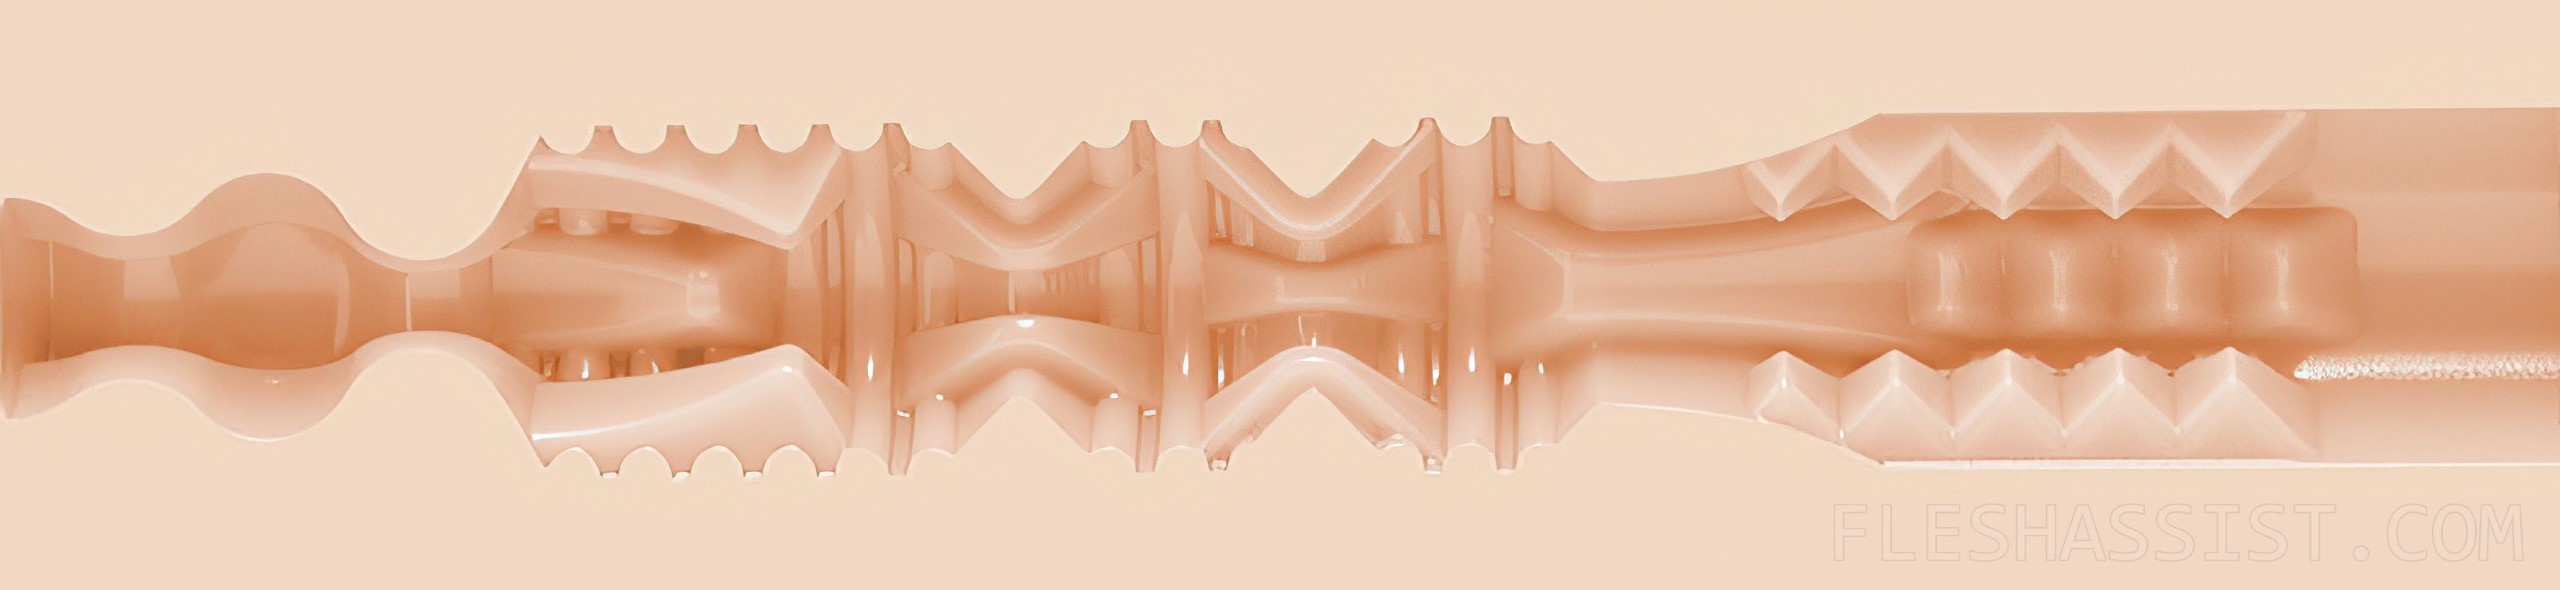 Candy Fleshlight Girls Texture Image